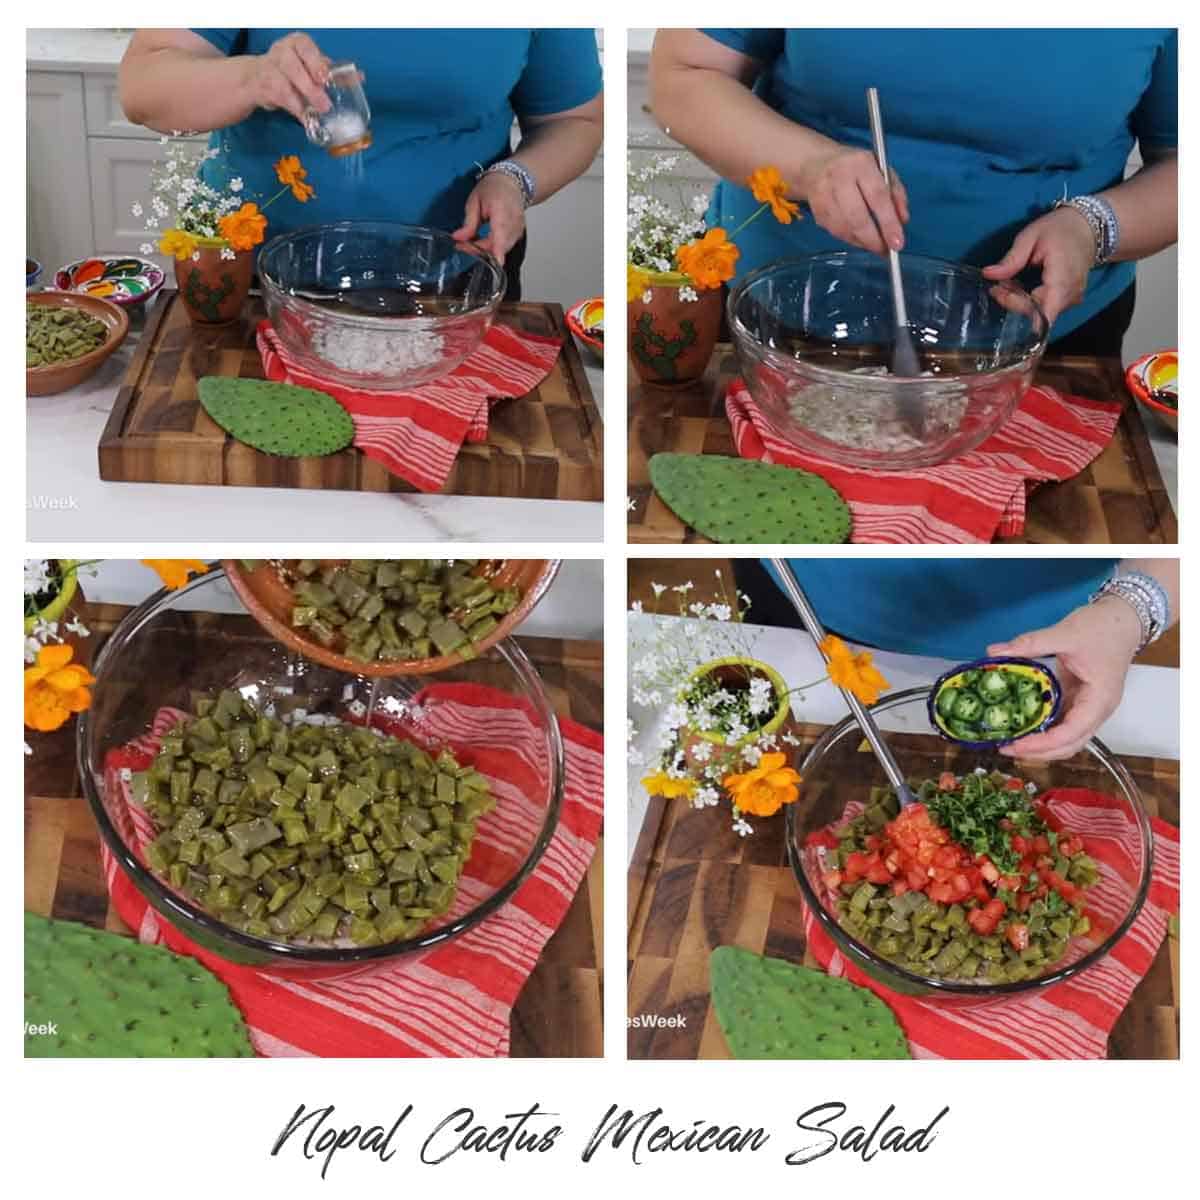 Nopal cactus salad